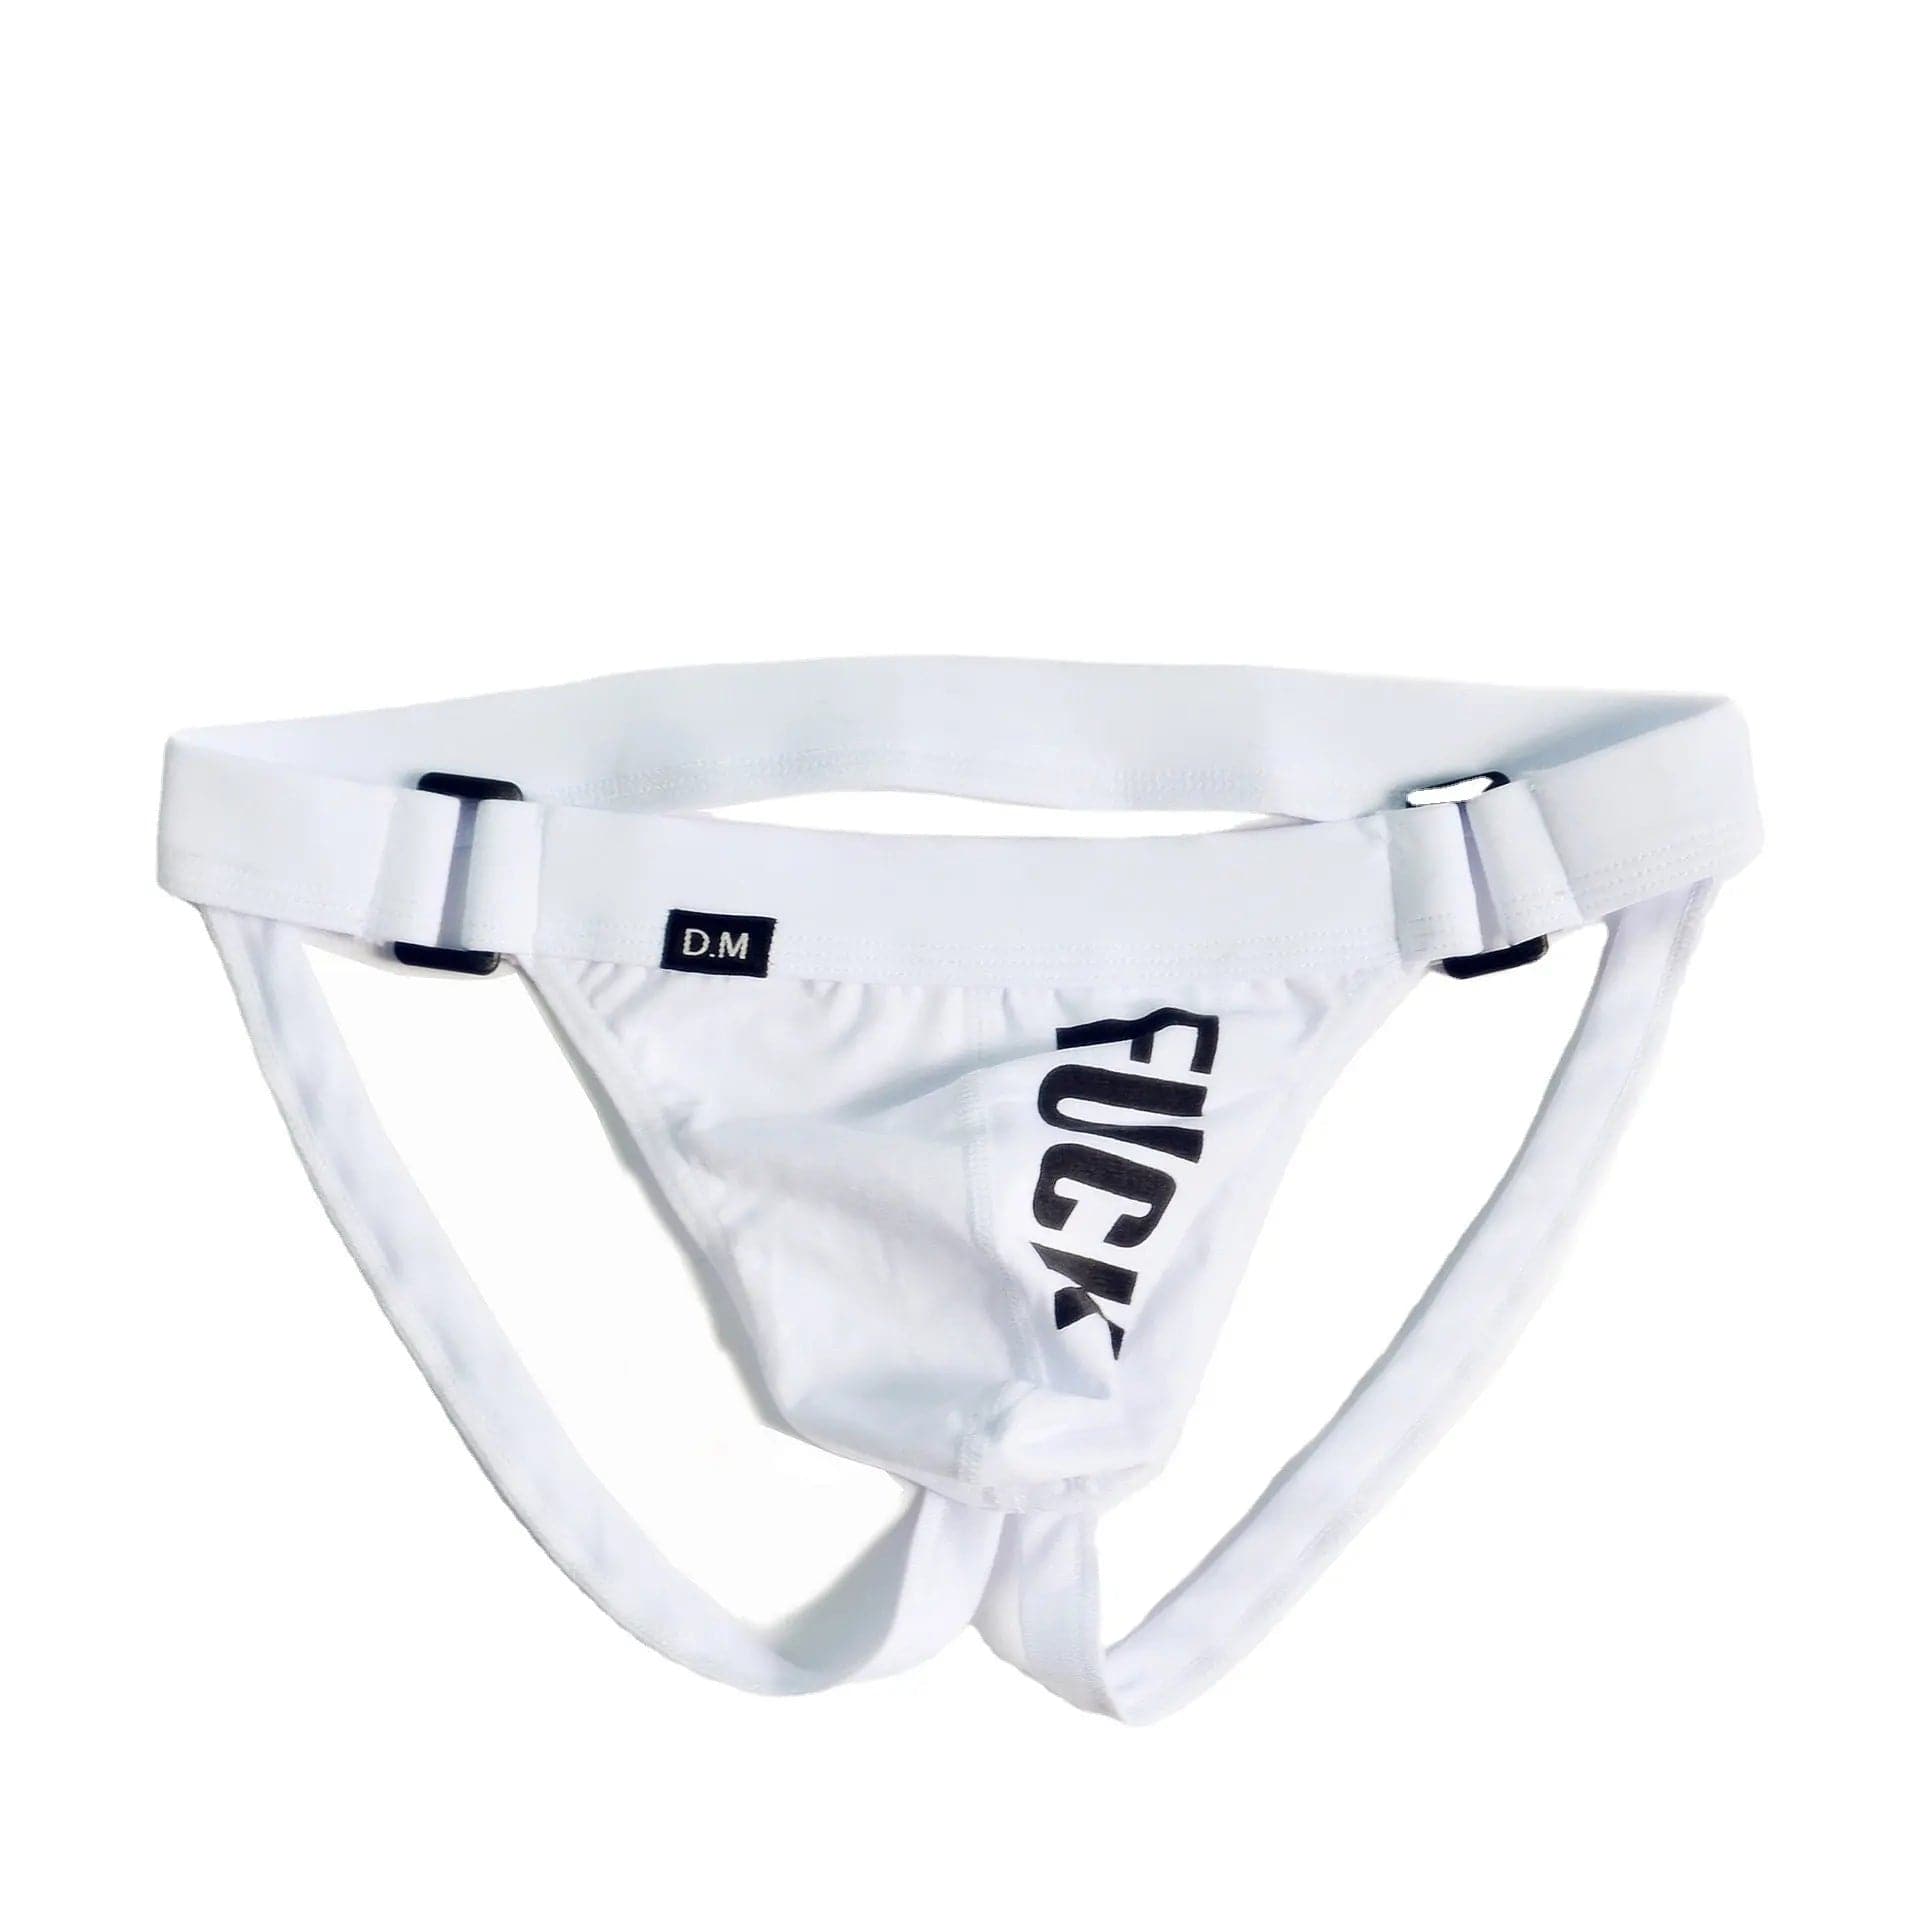 D.M Men's Underwear Low Waist Sexy Solid Color Thong D.M UNDERWEAR